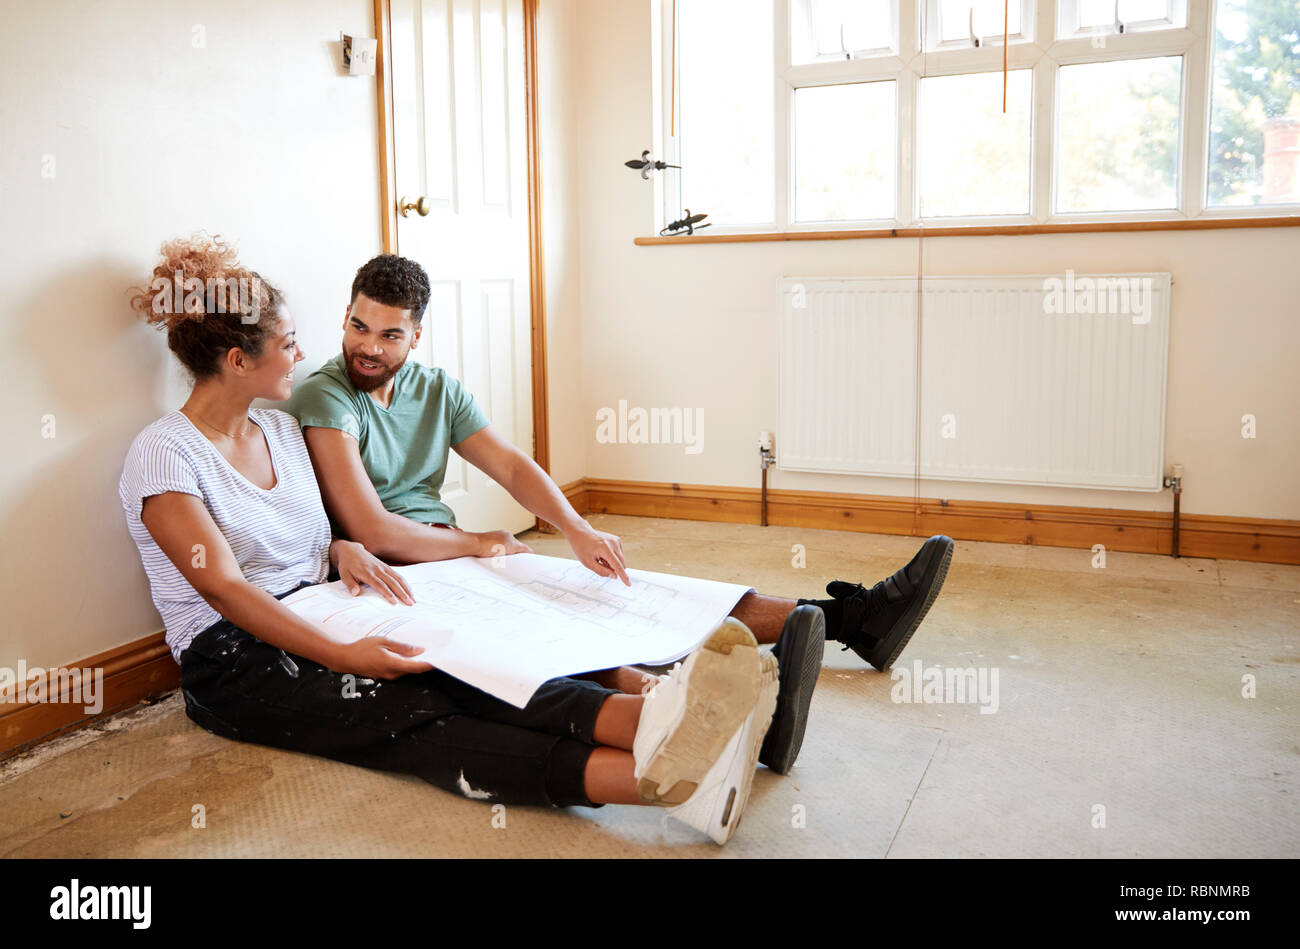 Couple Sitting on Floor Looking At Plans en salle vide de New Home Banque D'Images